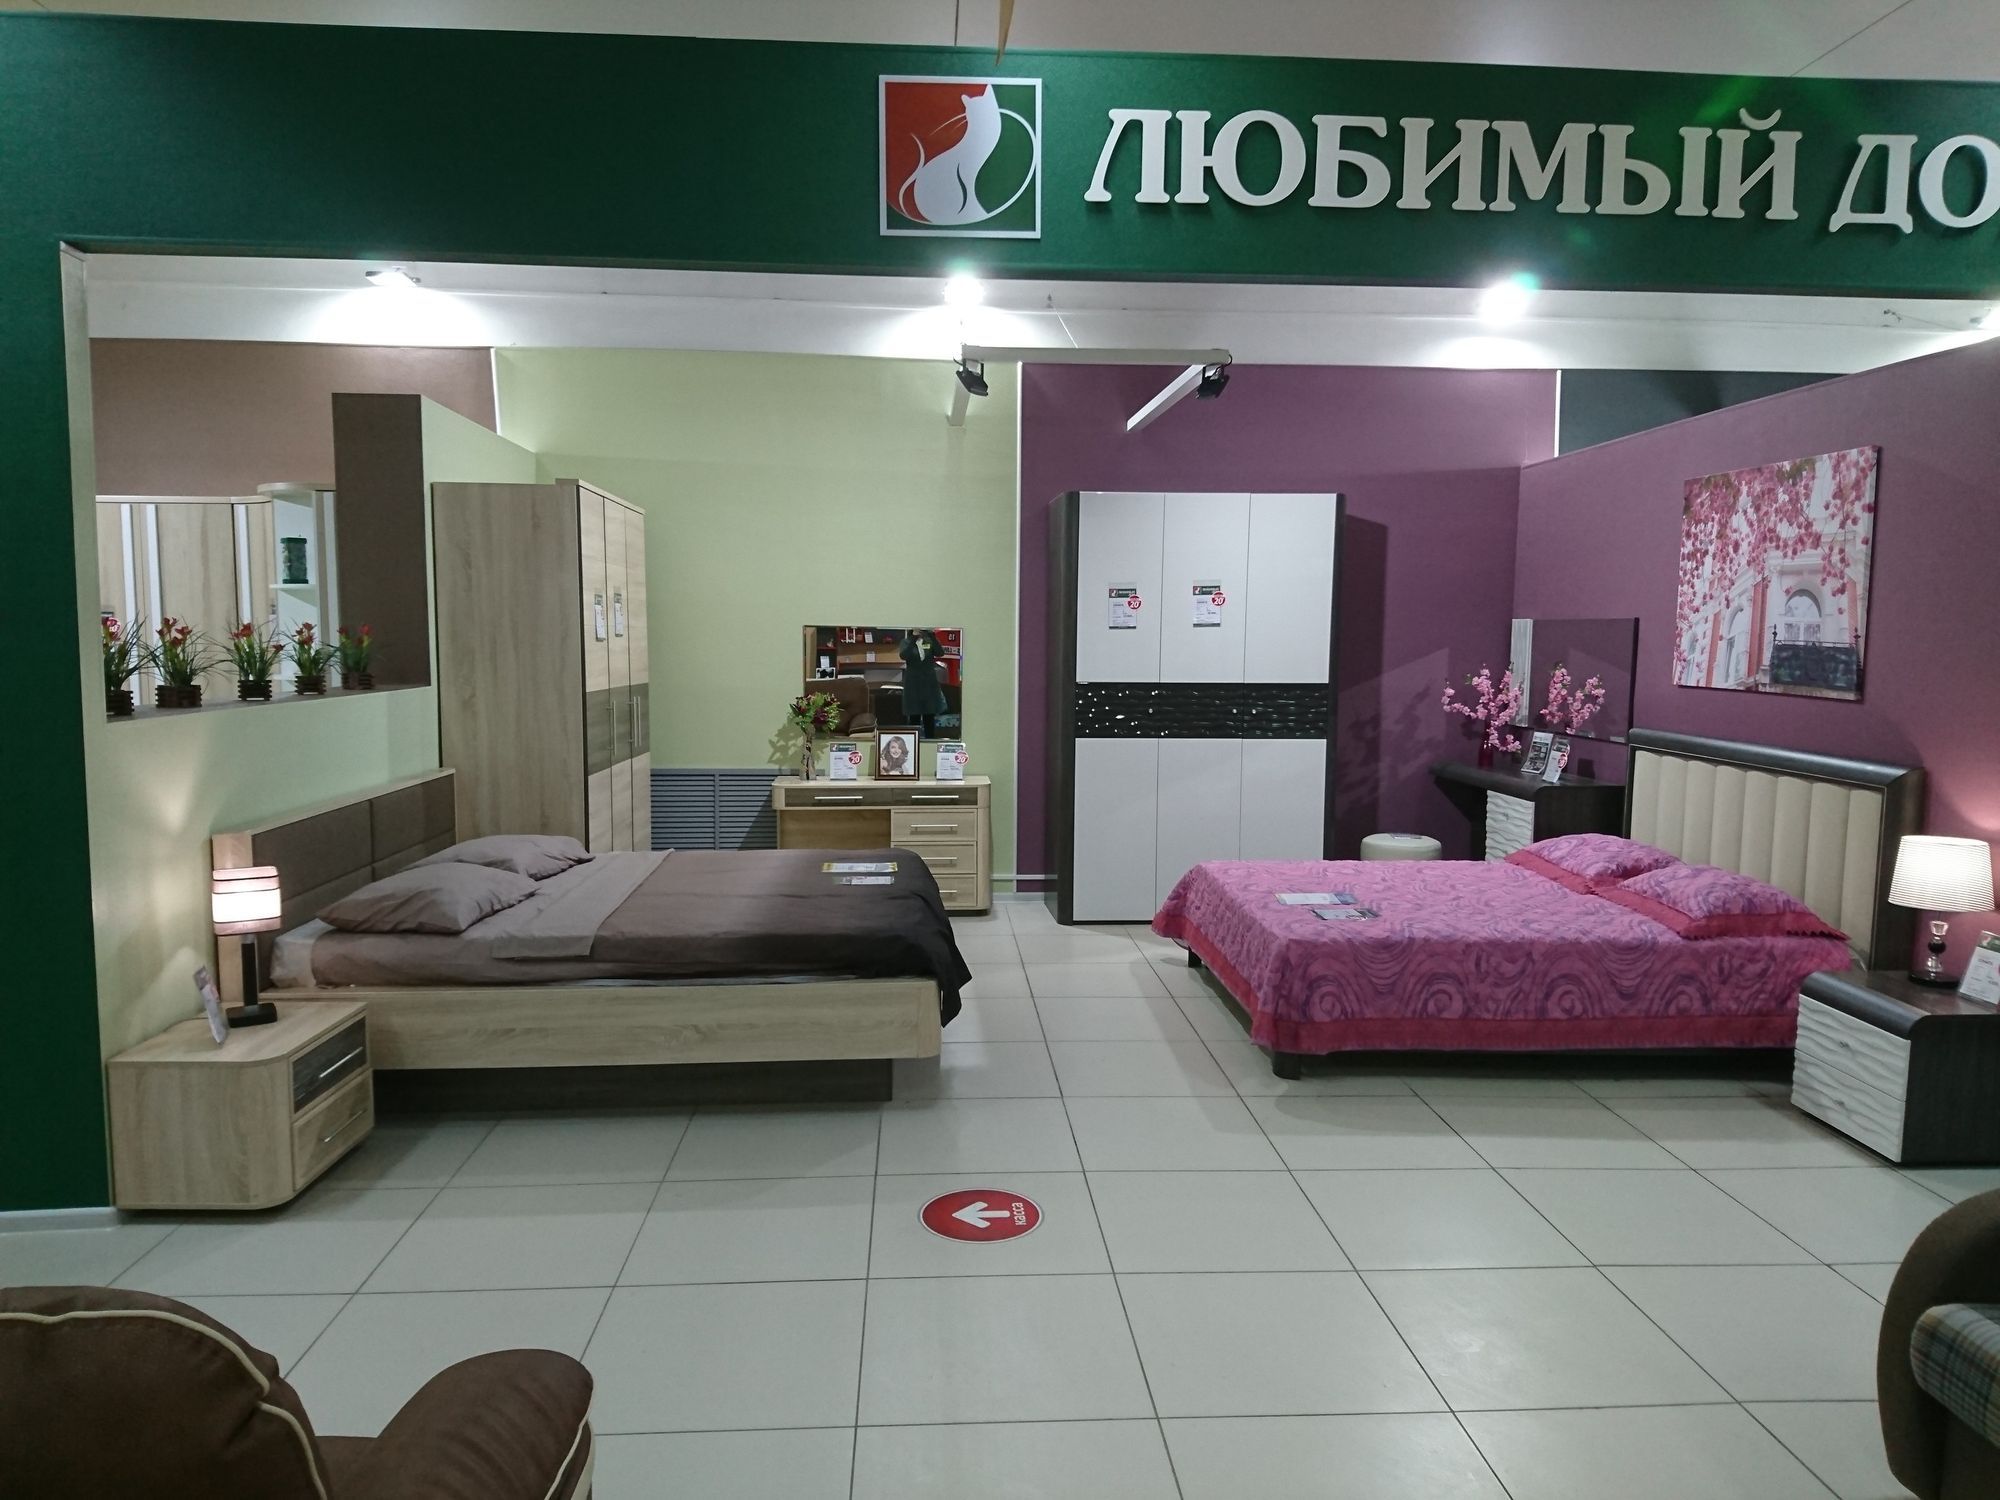 Магазин Мебели Южно Сахалинск Каталог